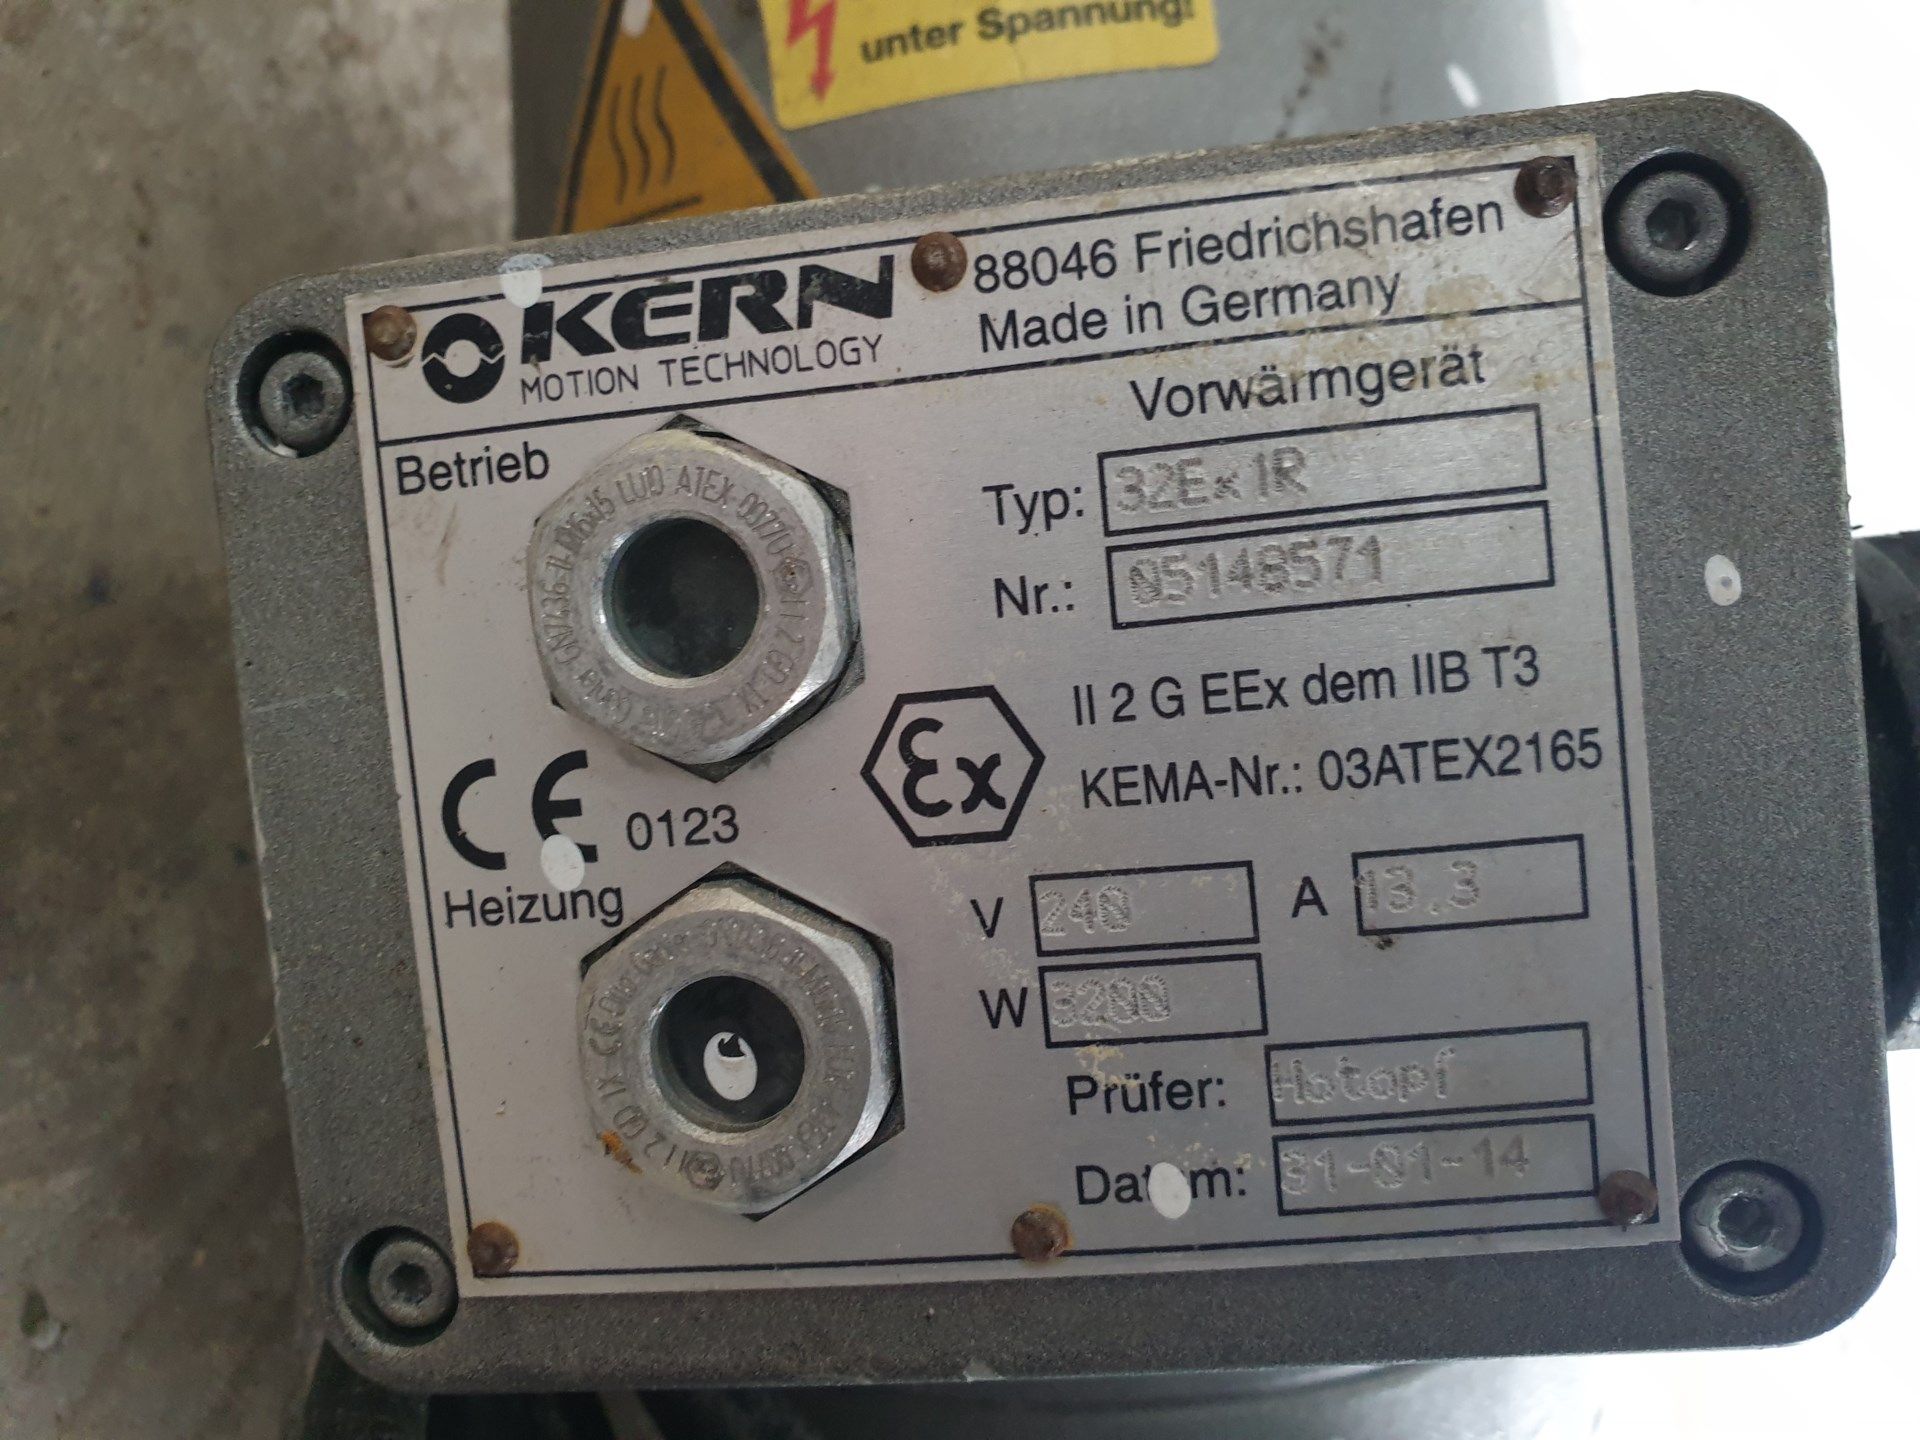 OKERN 32Ex1R - Image 2 of 2